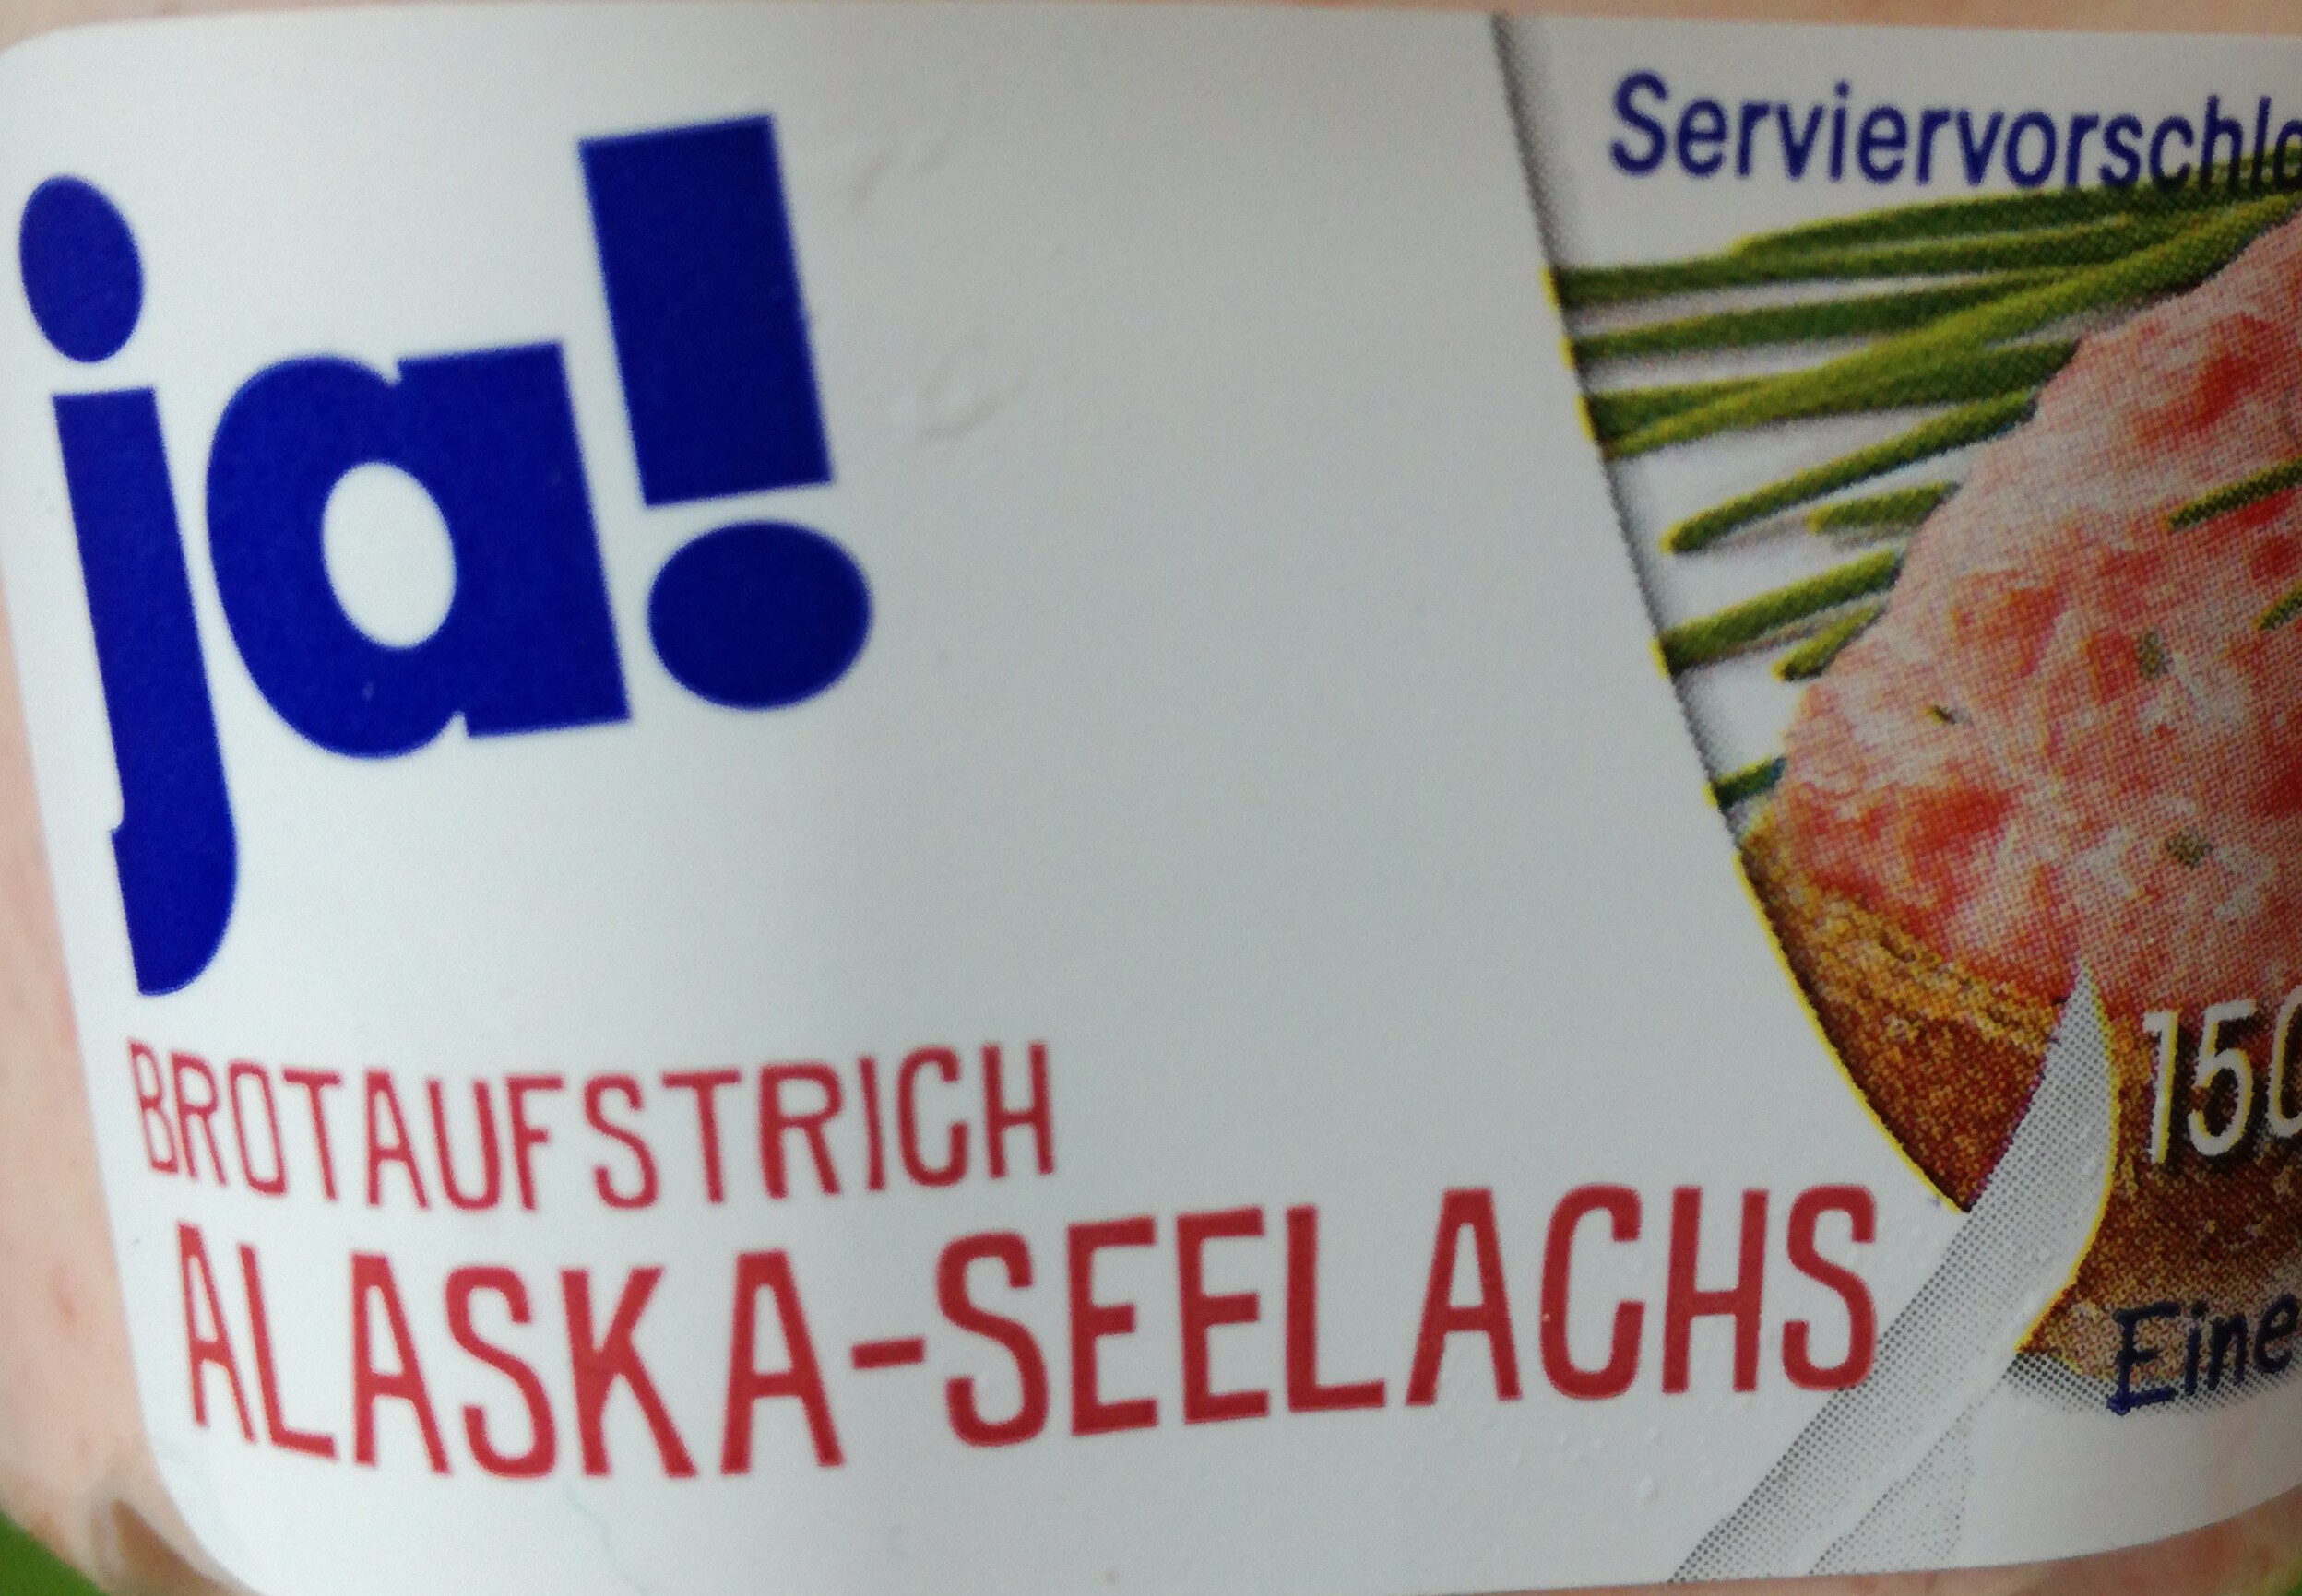 Brotaufstrich Alaska-Seelachs - Producto - de